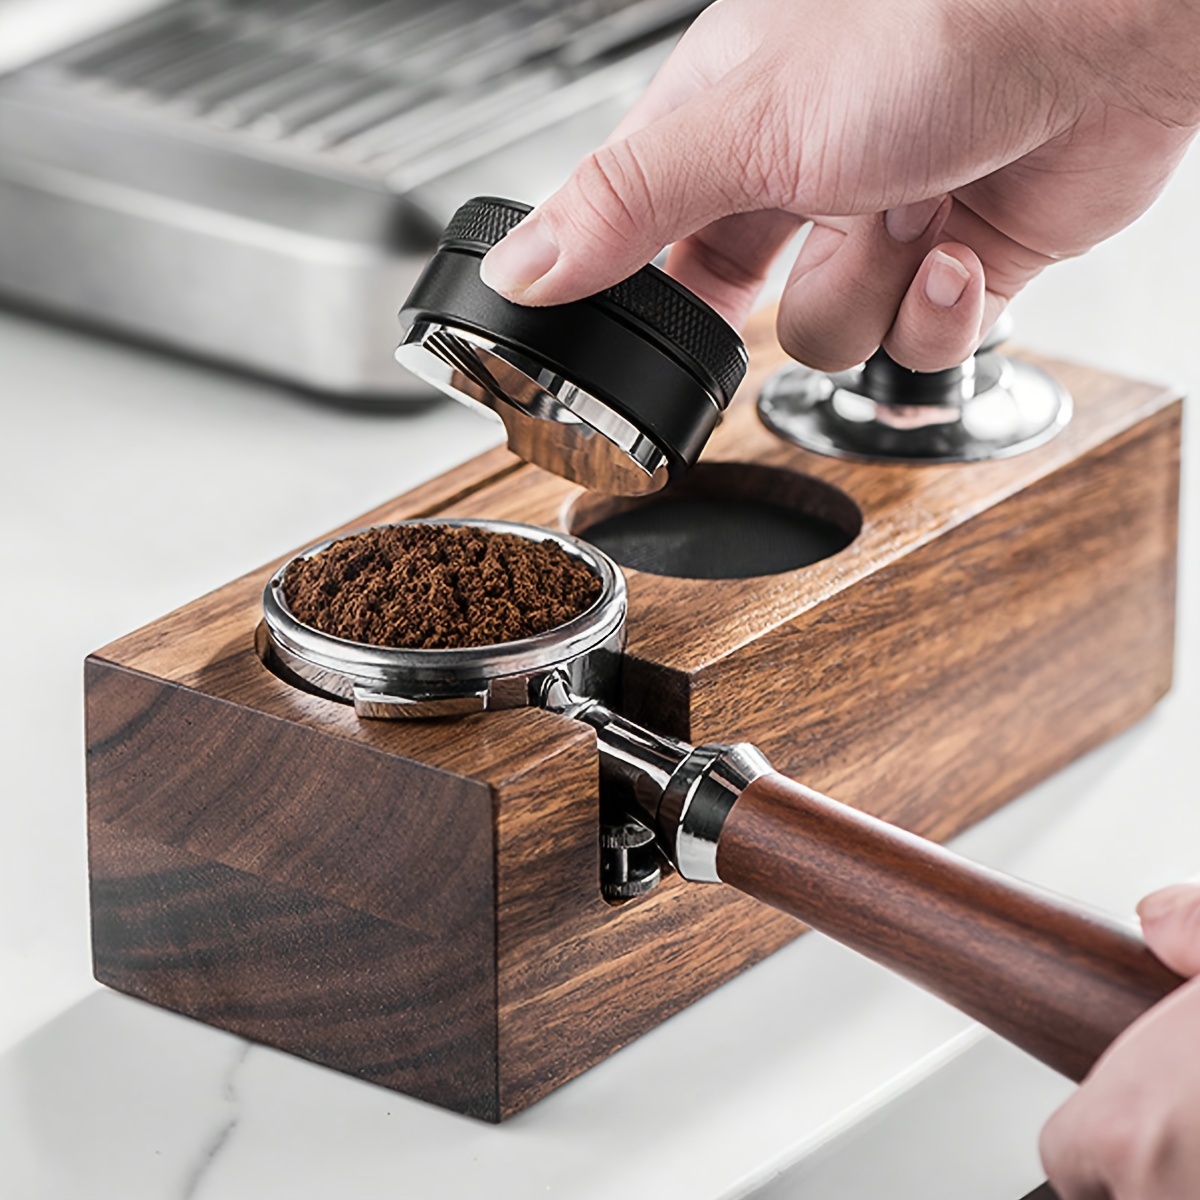 1pc Espresso Tamping Station Compatible With 51/53/58mm Delonghi Espresso  Machine Accessories For Coffee Bar Walnut Coffee Tamper Stand And Barista  Espresso Tools